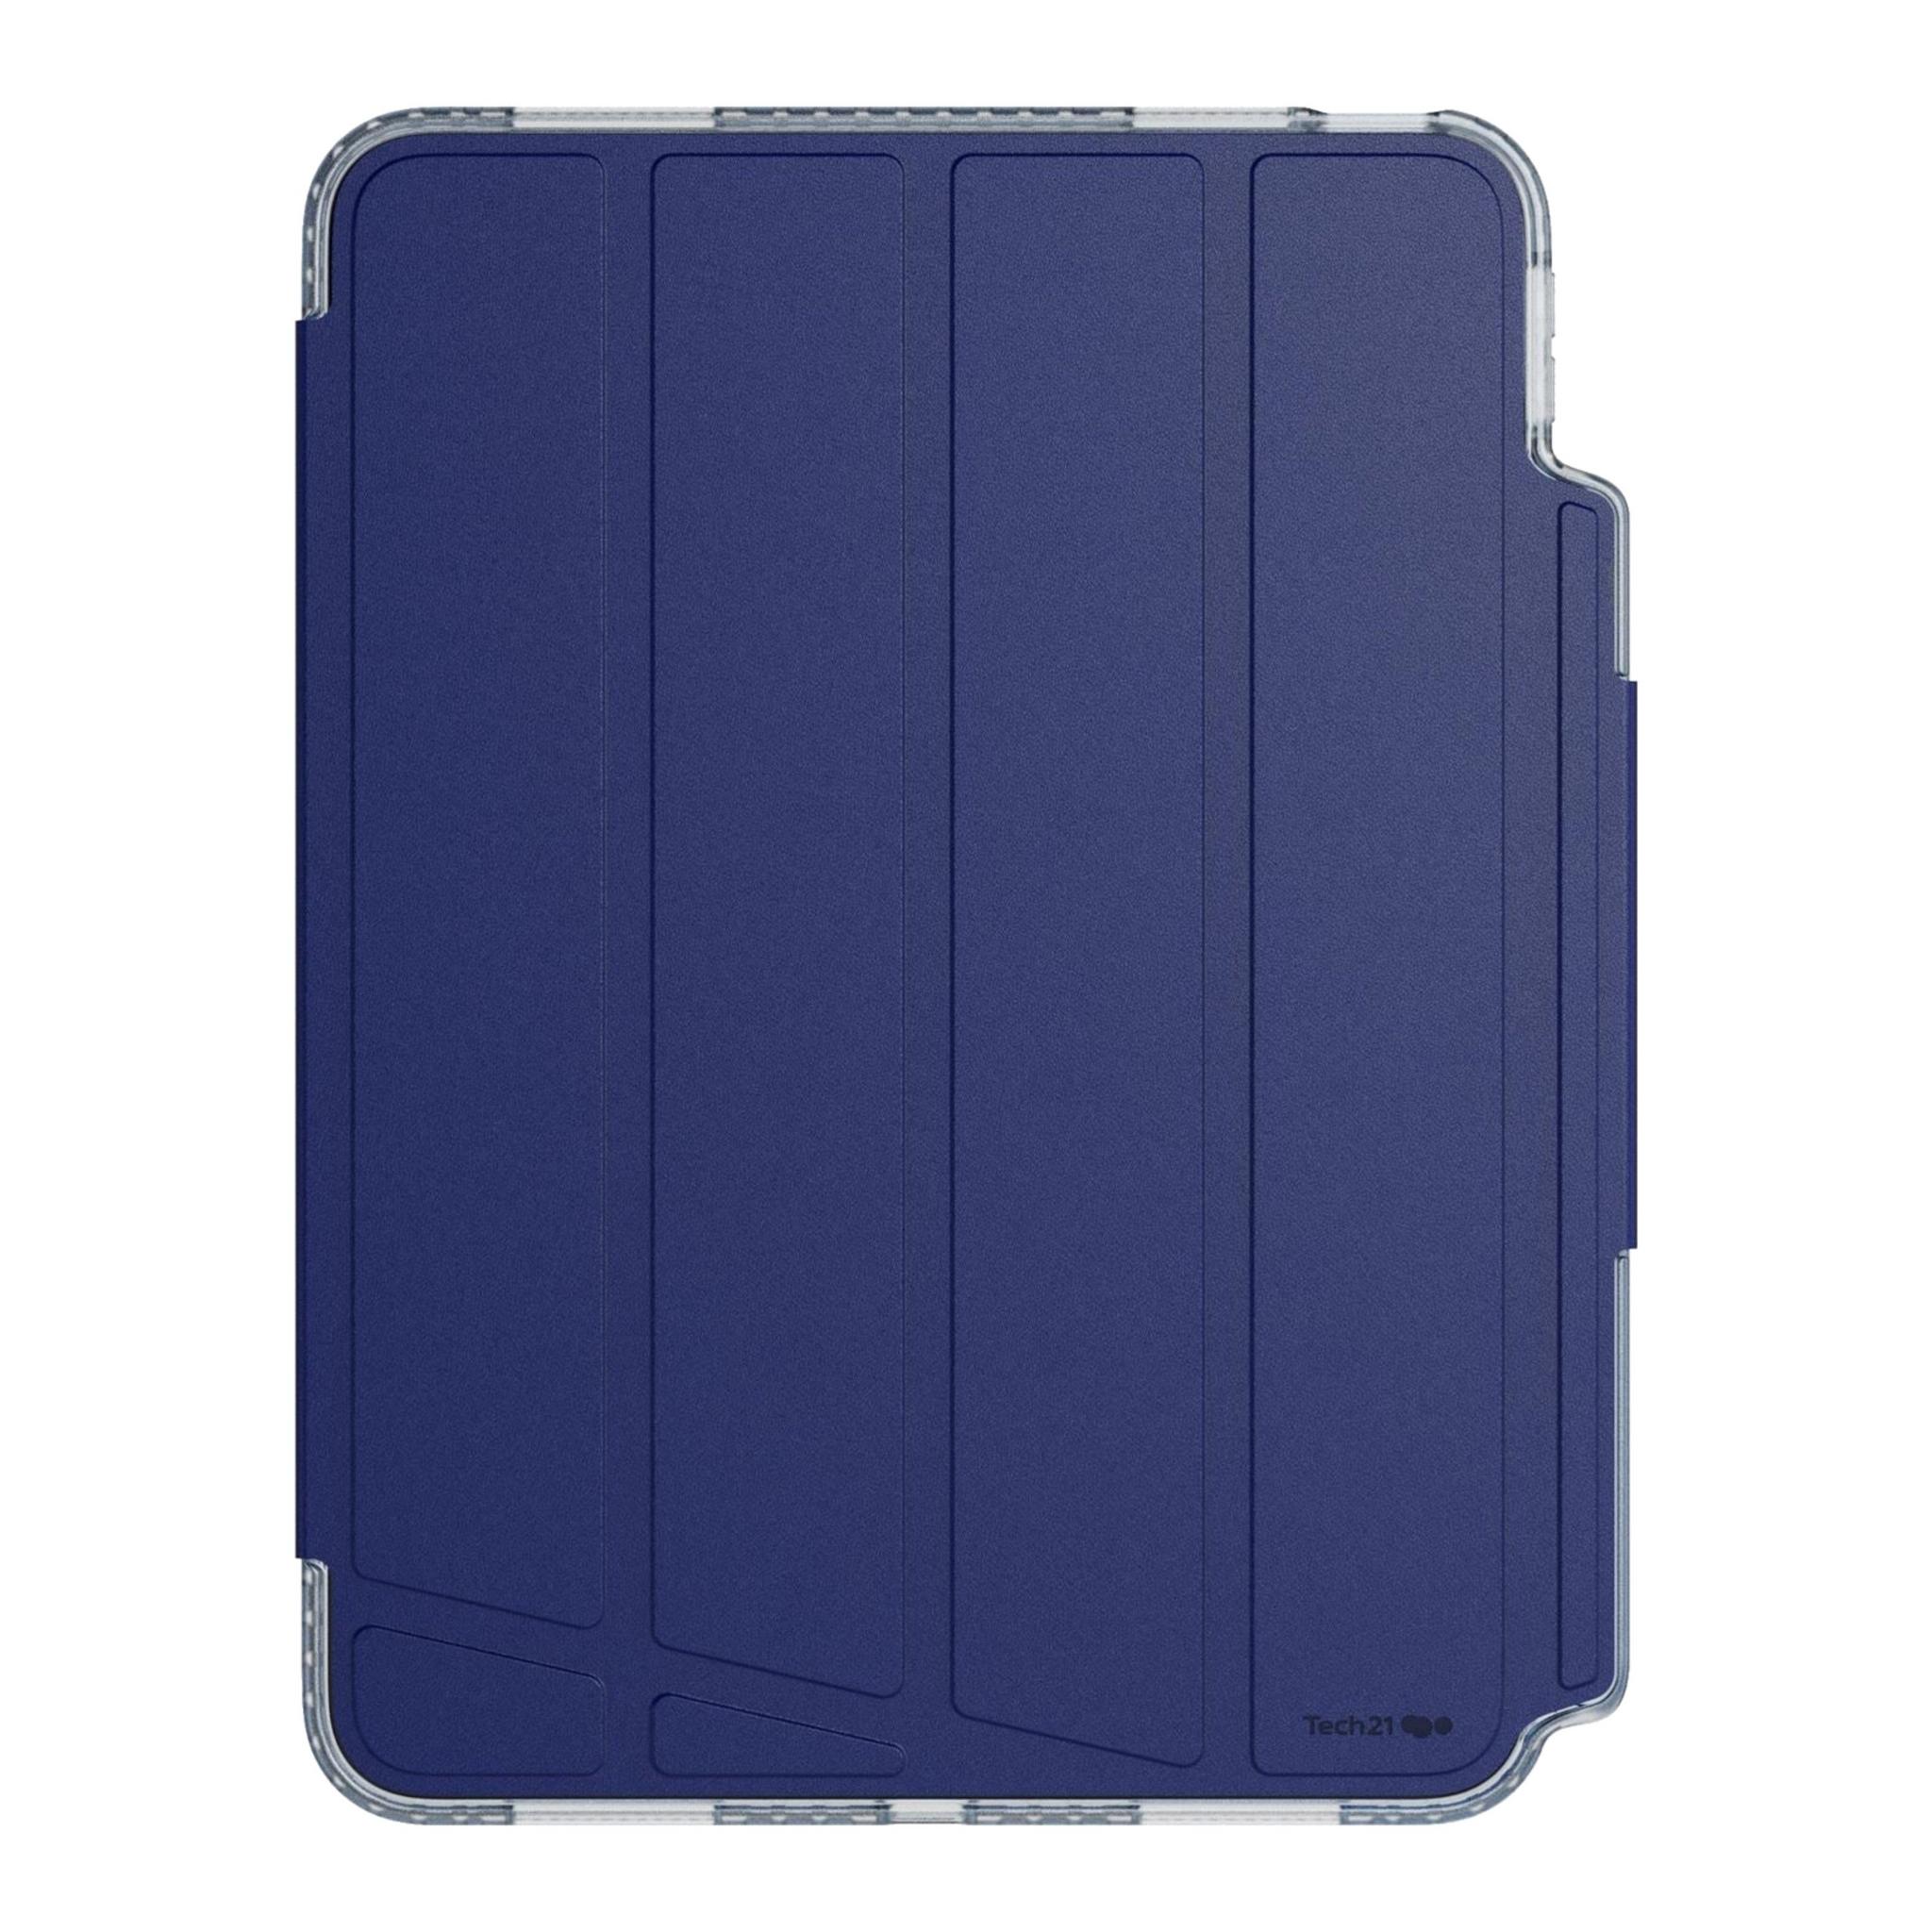 TECH21 EvoFolio Case for iPad 10th Gen, T21-10208- Blue